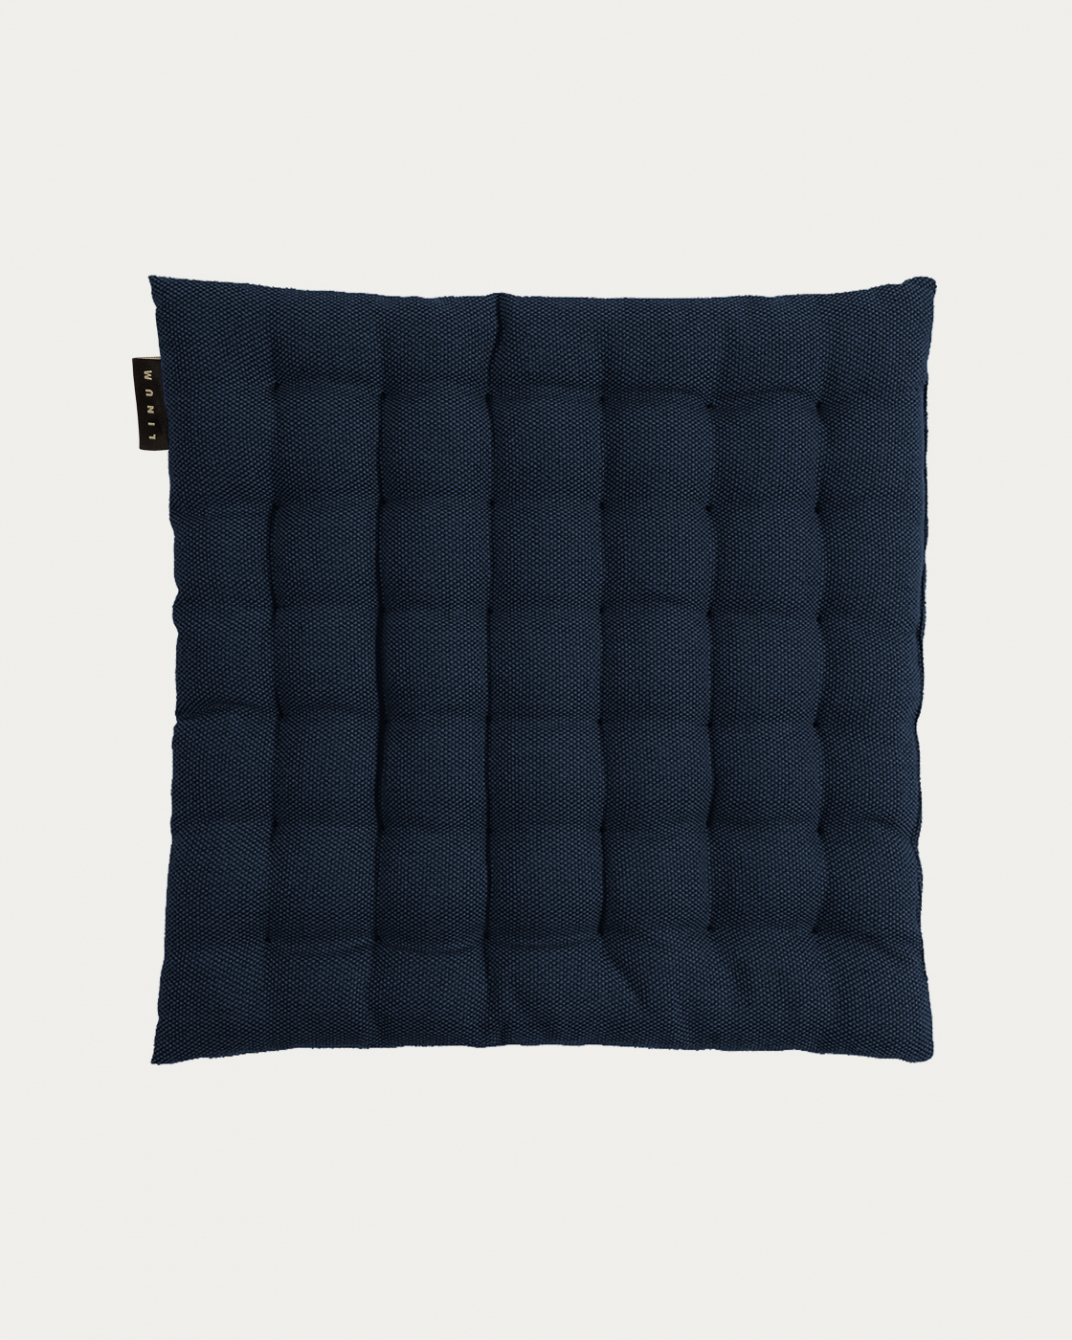 PEPPER Seat cushion 40x40 cm Dark navy blue